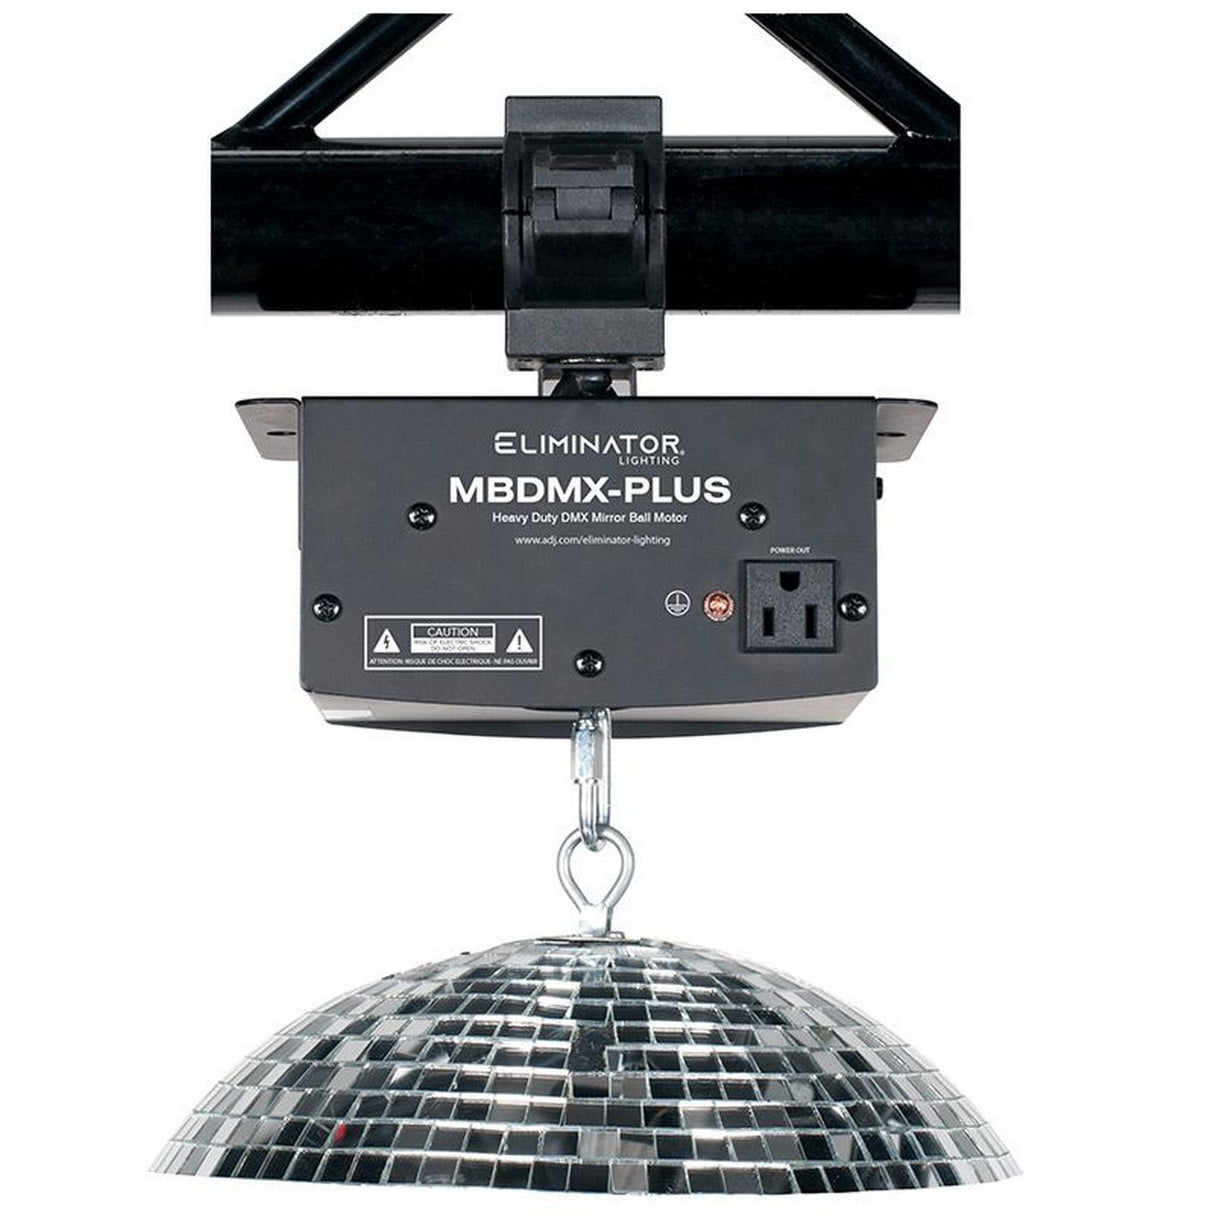 Eliminator Lighting MBDMX-PLUS Heavy Duty DMX Mirror Ball Motor